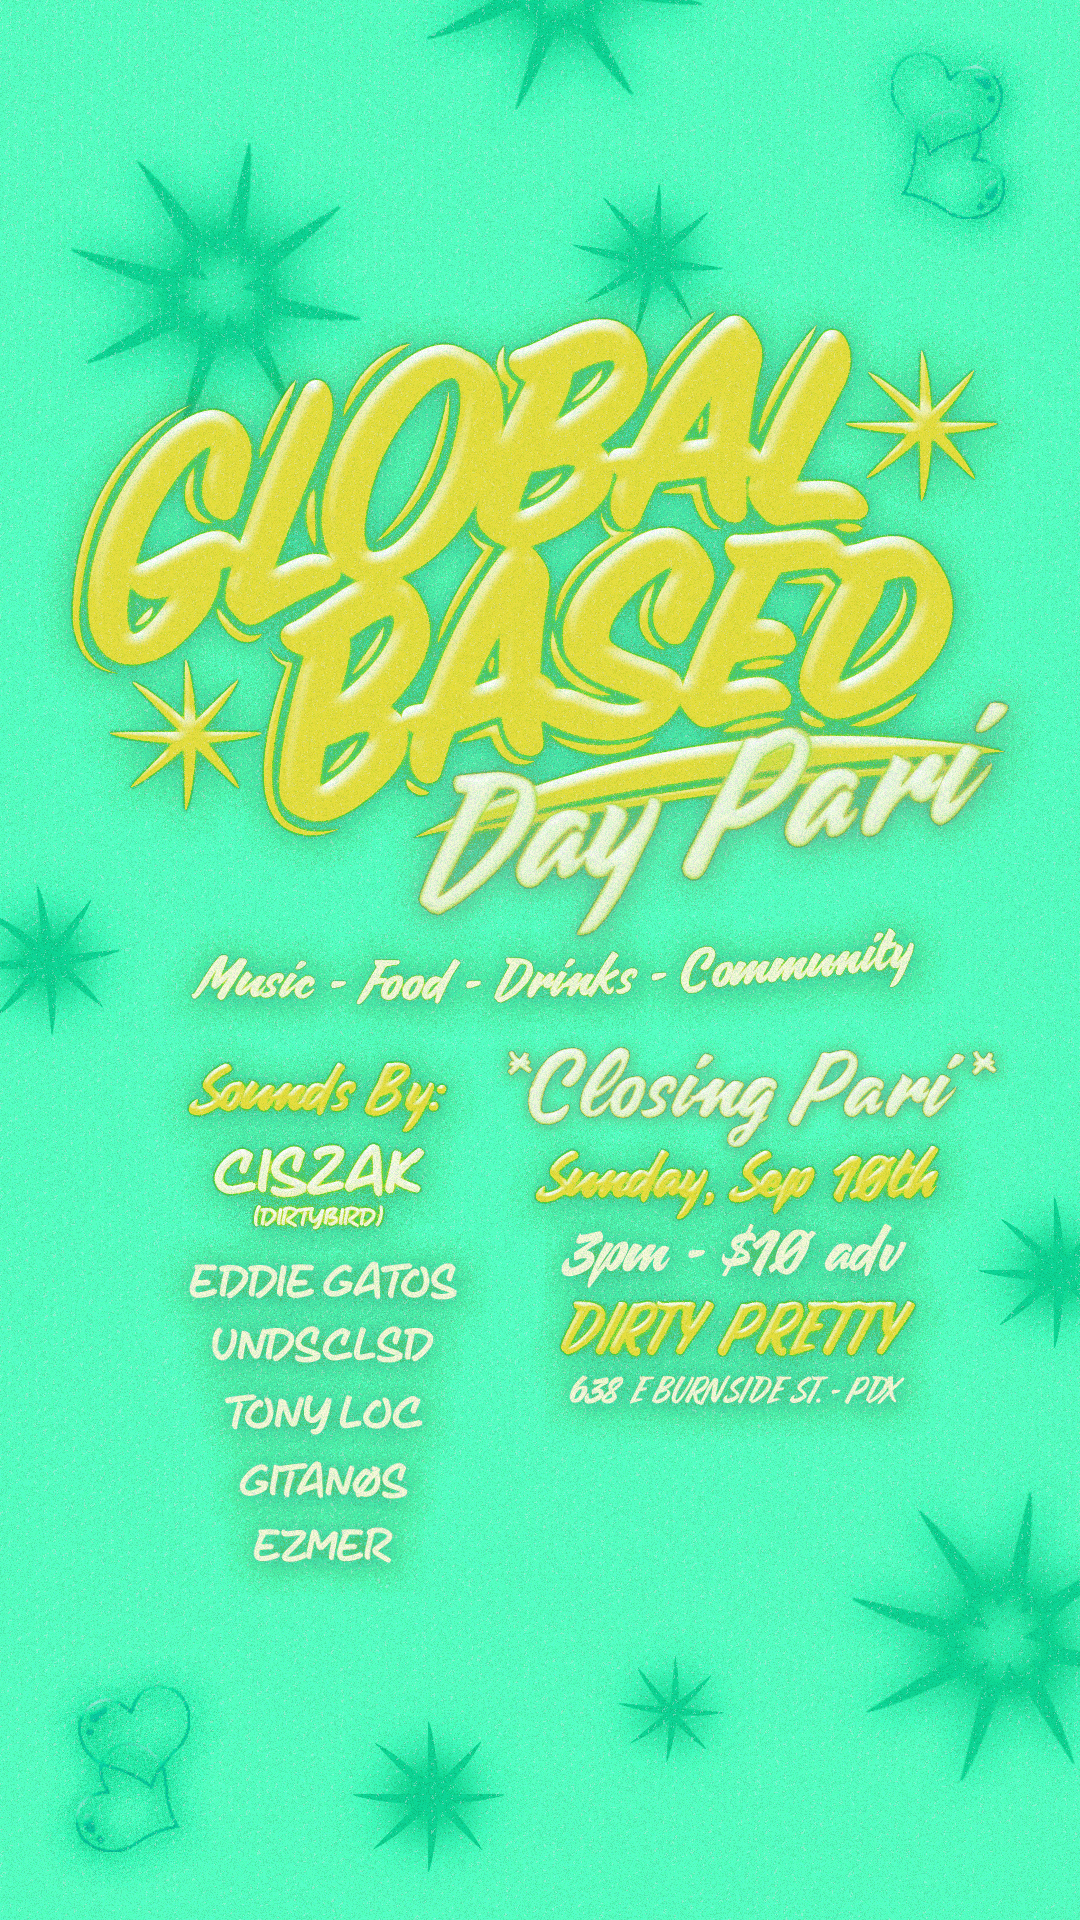 Global Based: DAY PARI with Ciszak - フライヤー表